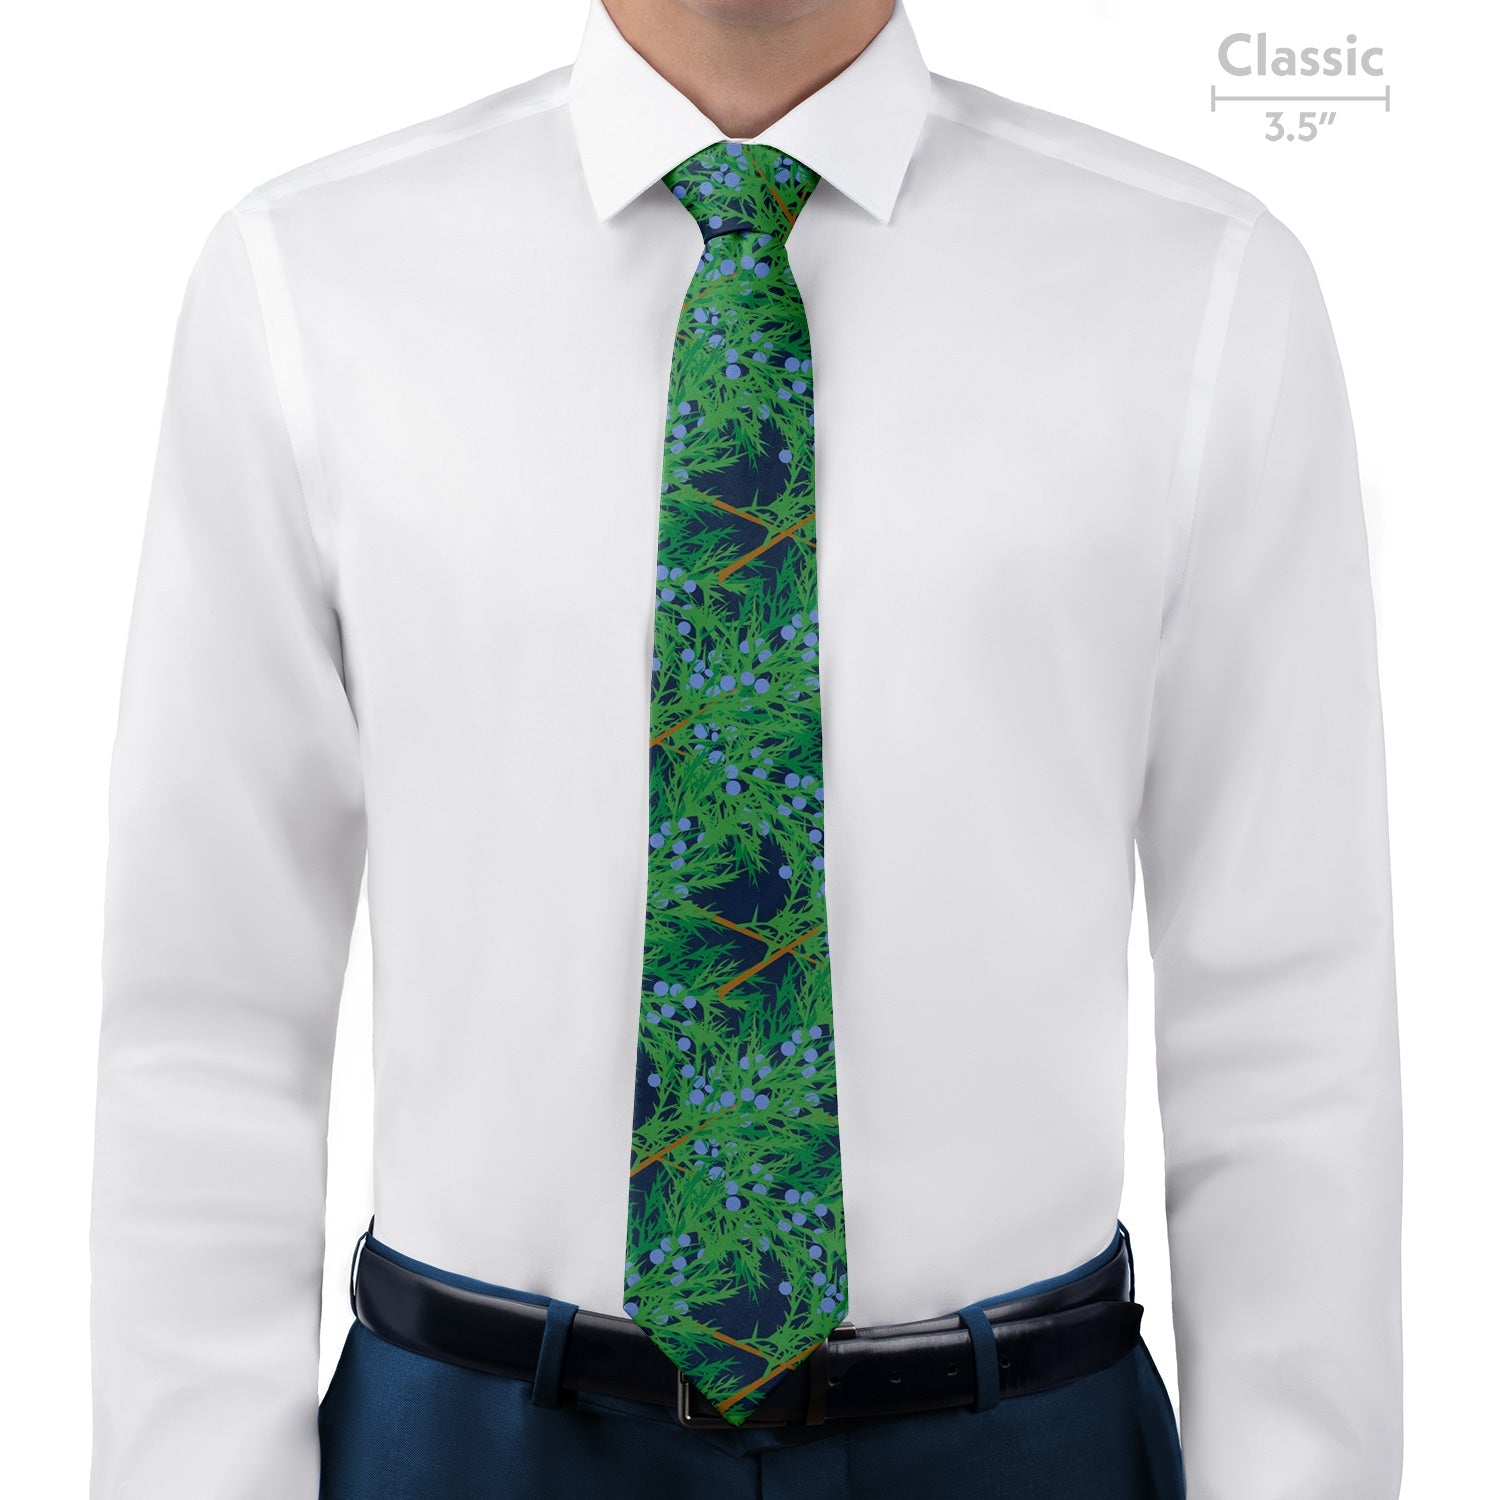 Juniper Necktie - Classic - Knotty Tie Co.